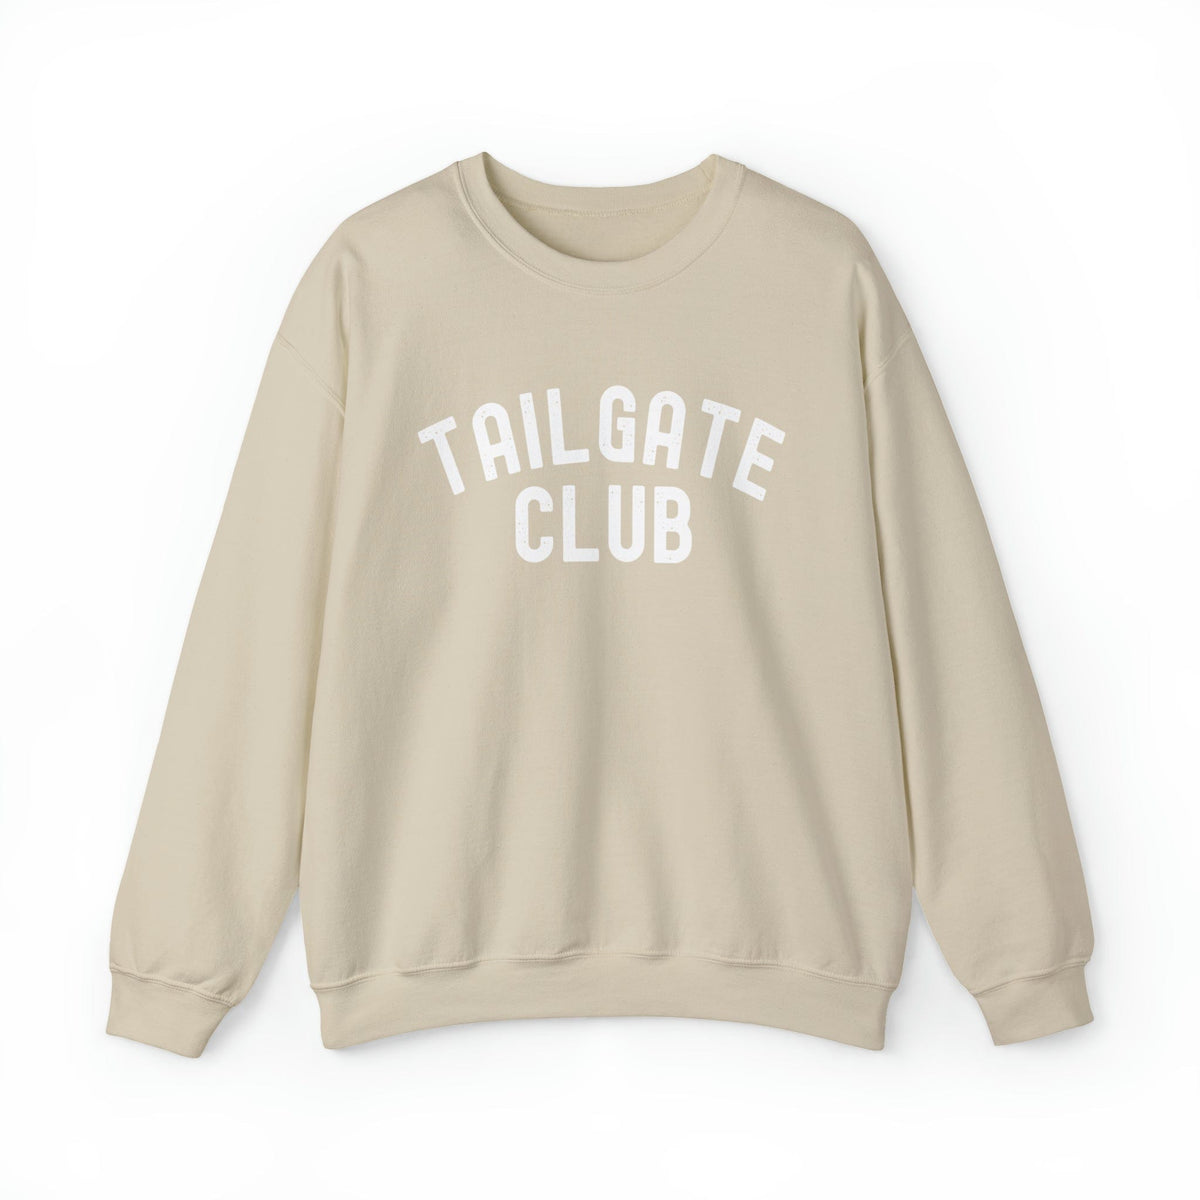 Tailgate Club Crewneck | Football Sweatshirt | Tailgate Party Sweatshirt TheFringeCultureCollective